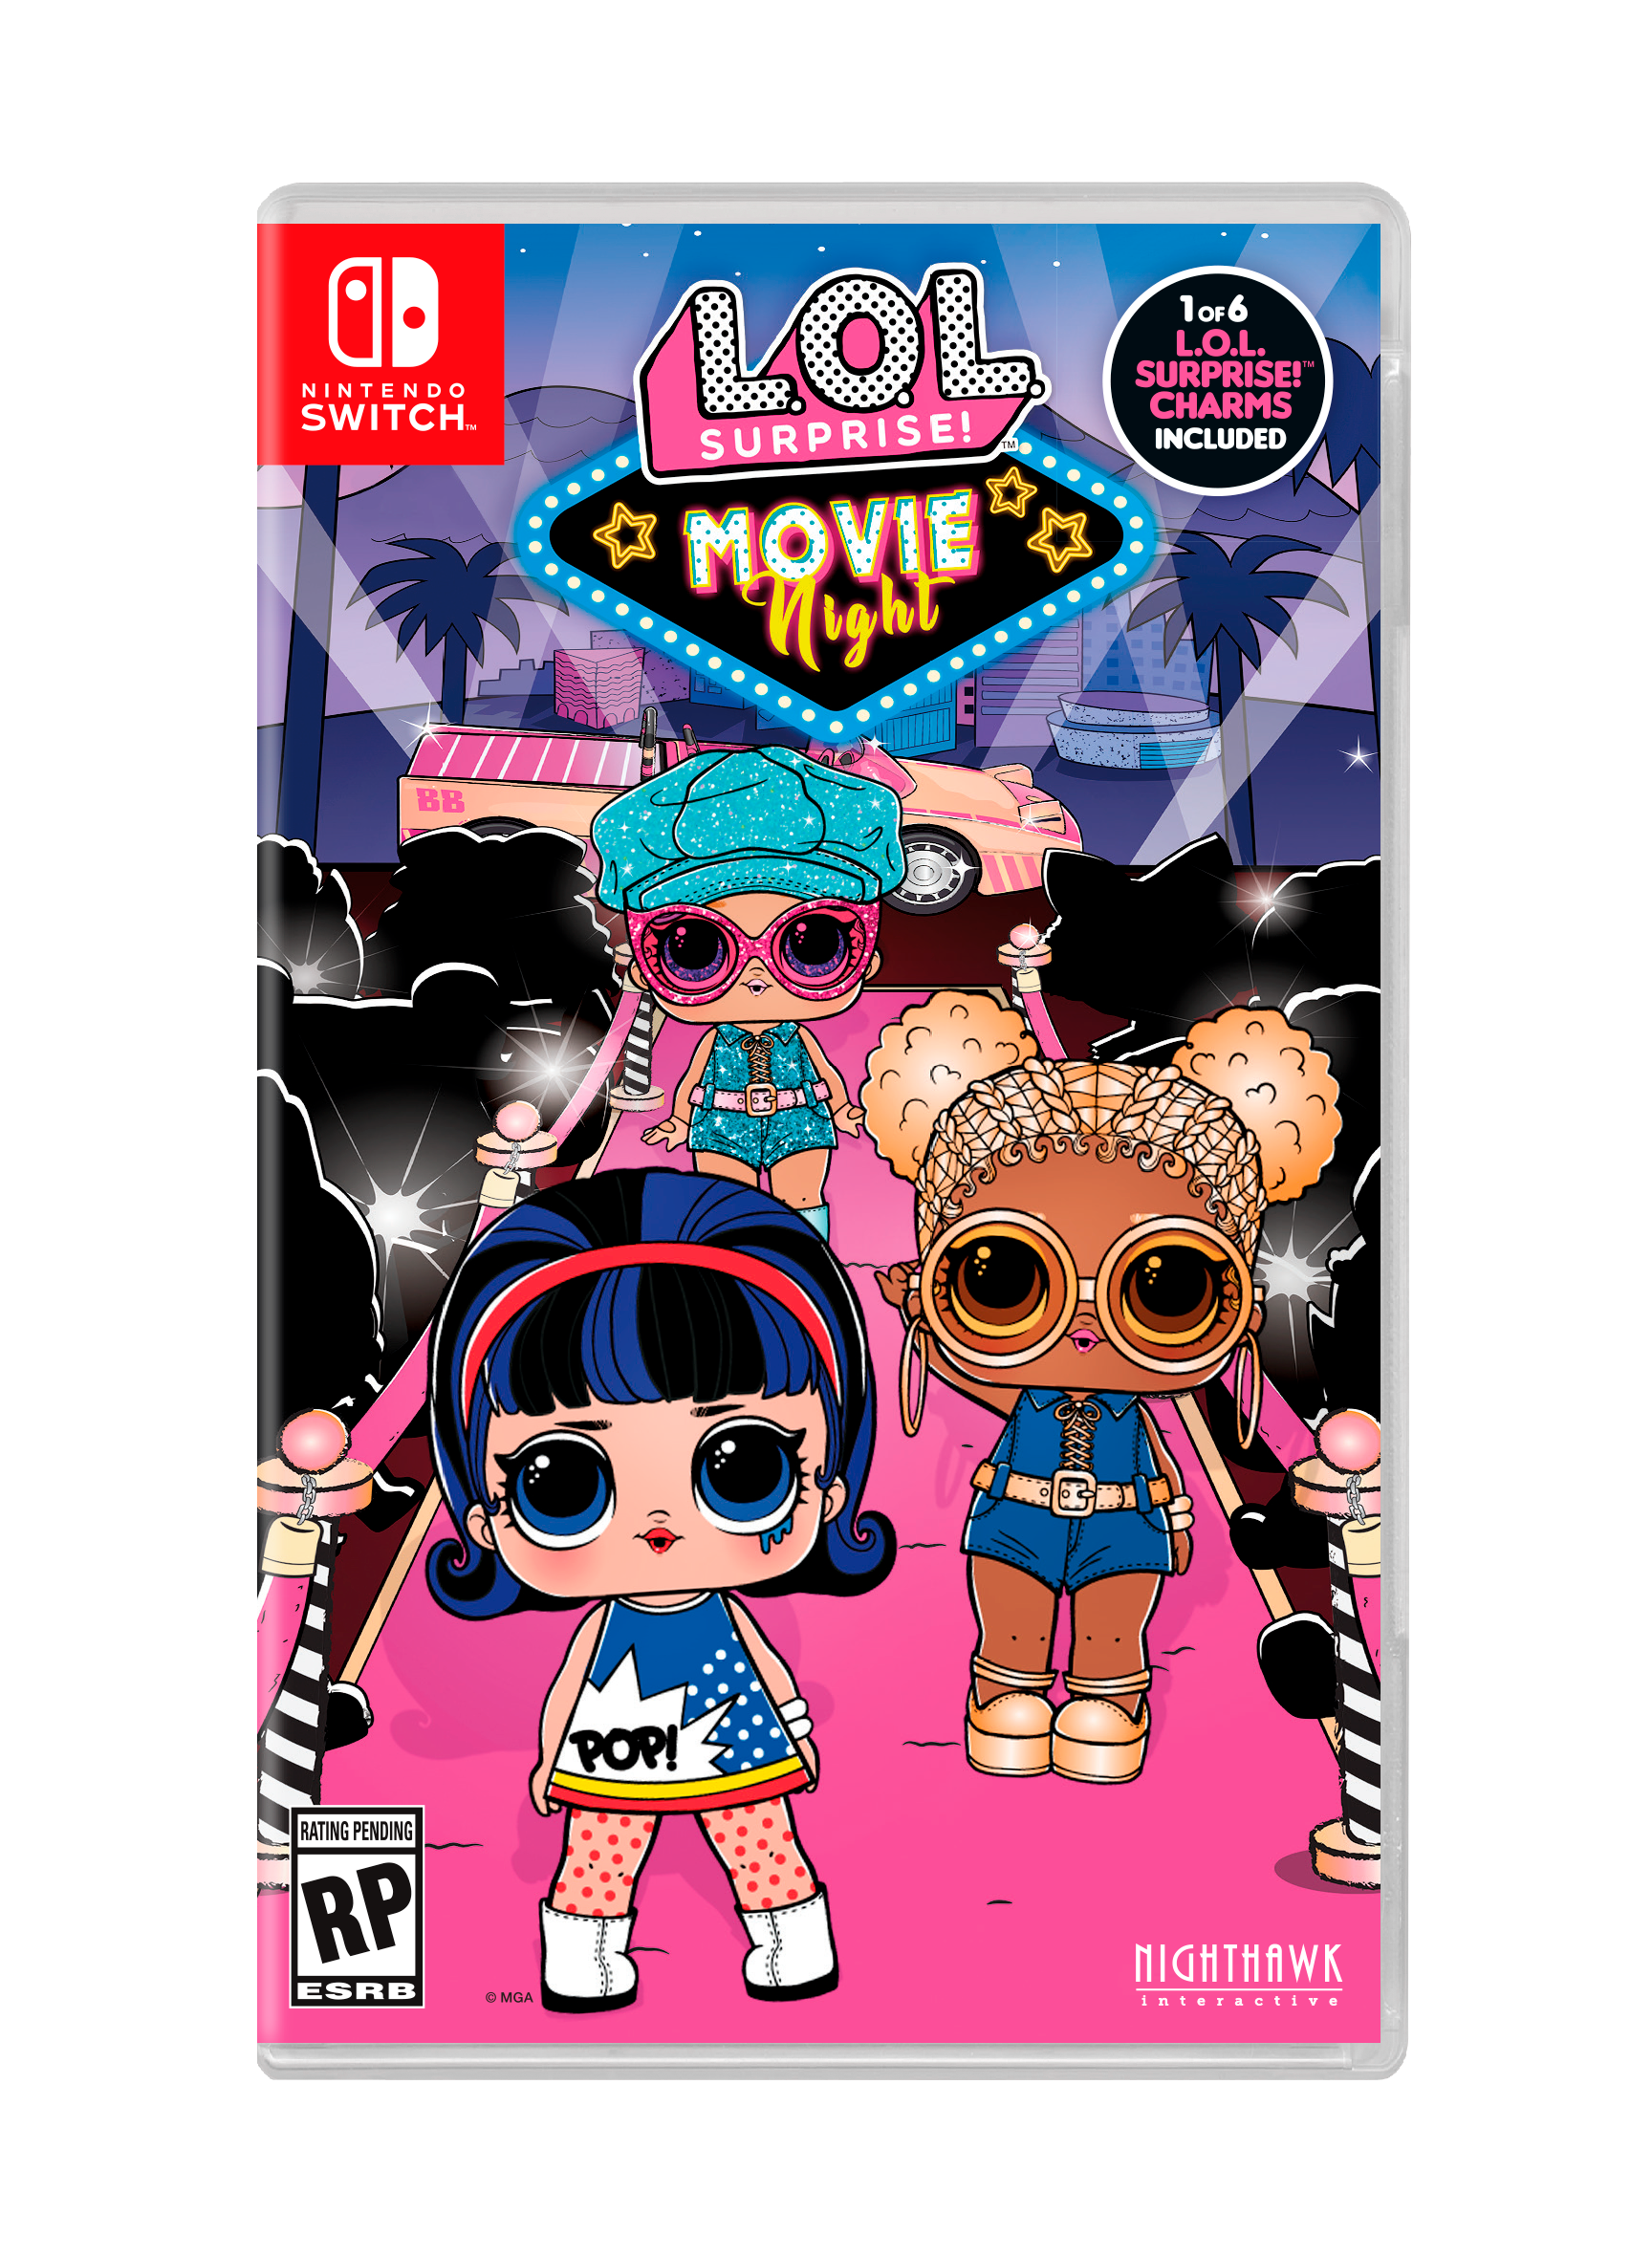 L.O.L. Surprise Movie Night - Nintendo Switch (Nighthawk Interactive) for Nintendo Switch, Digital - GameStop